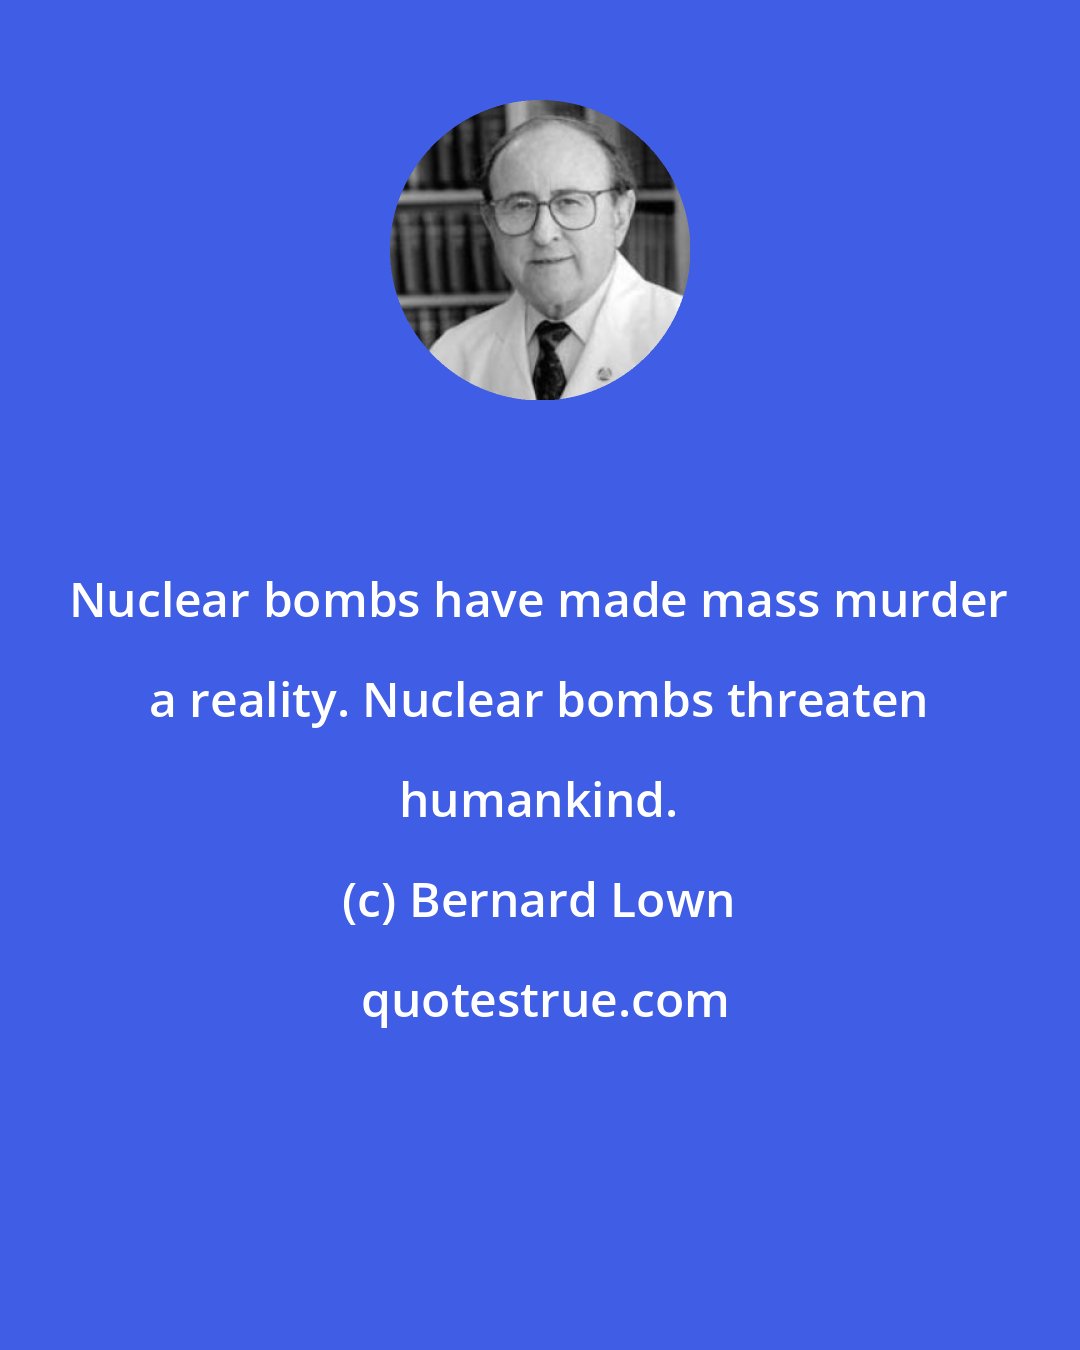 Bernard Lown: Nuclear bombs have made mass murder a reality. Nuclear bombs threaten humankind.